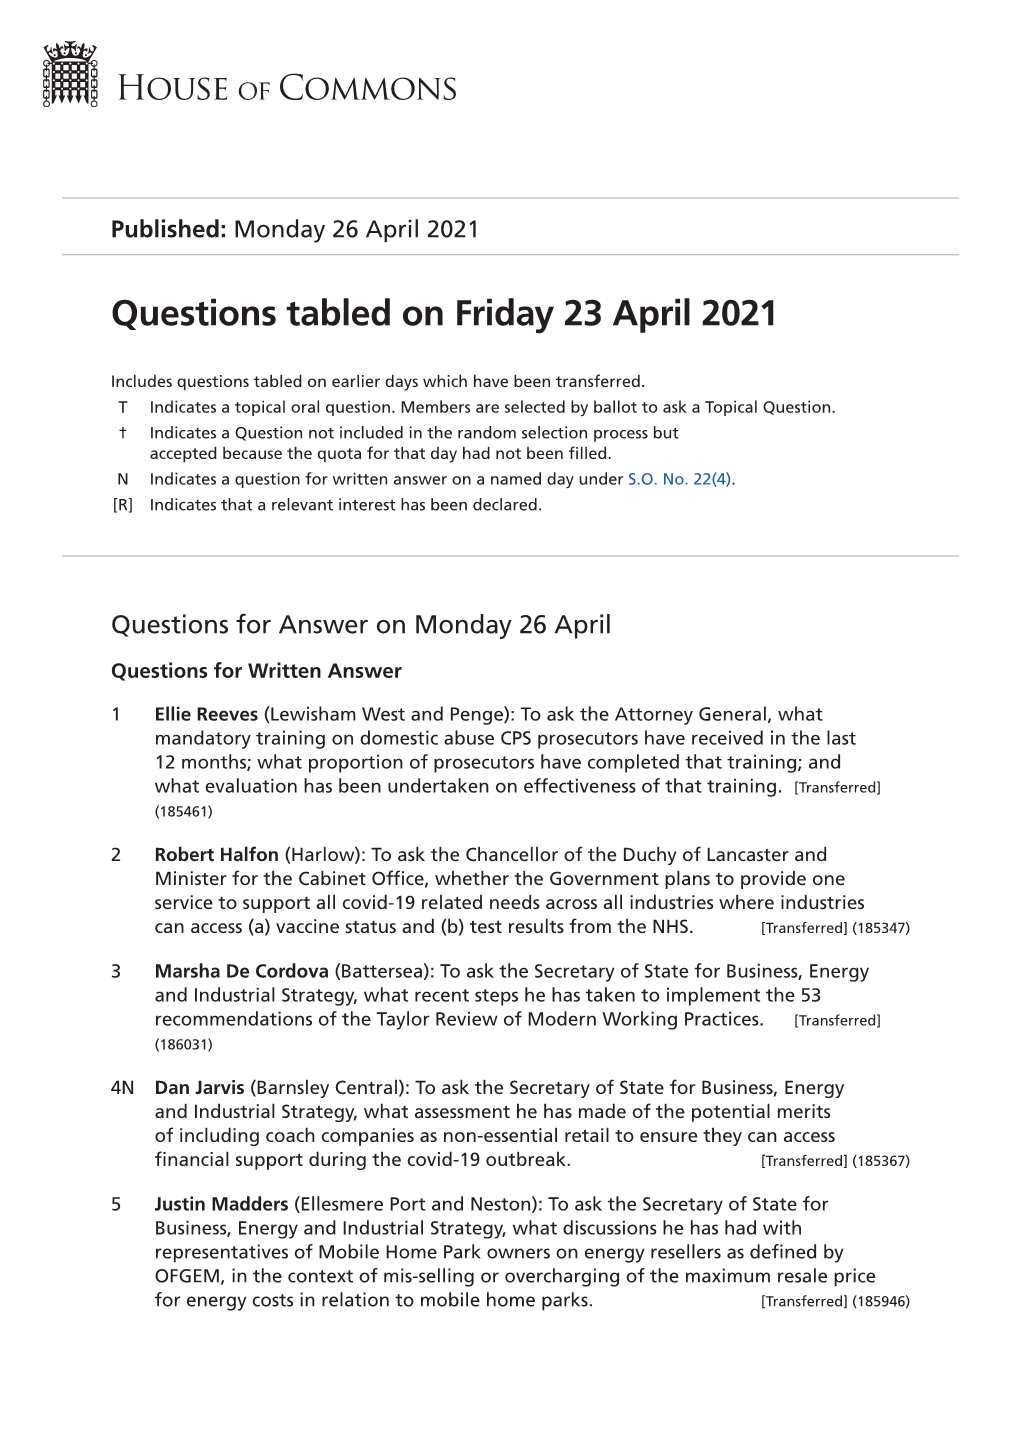 Questions Tabled on Fri 23 Apr 2021